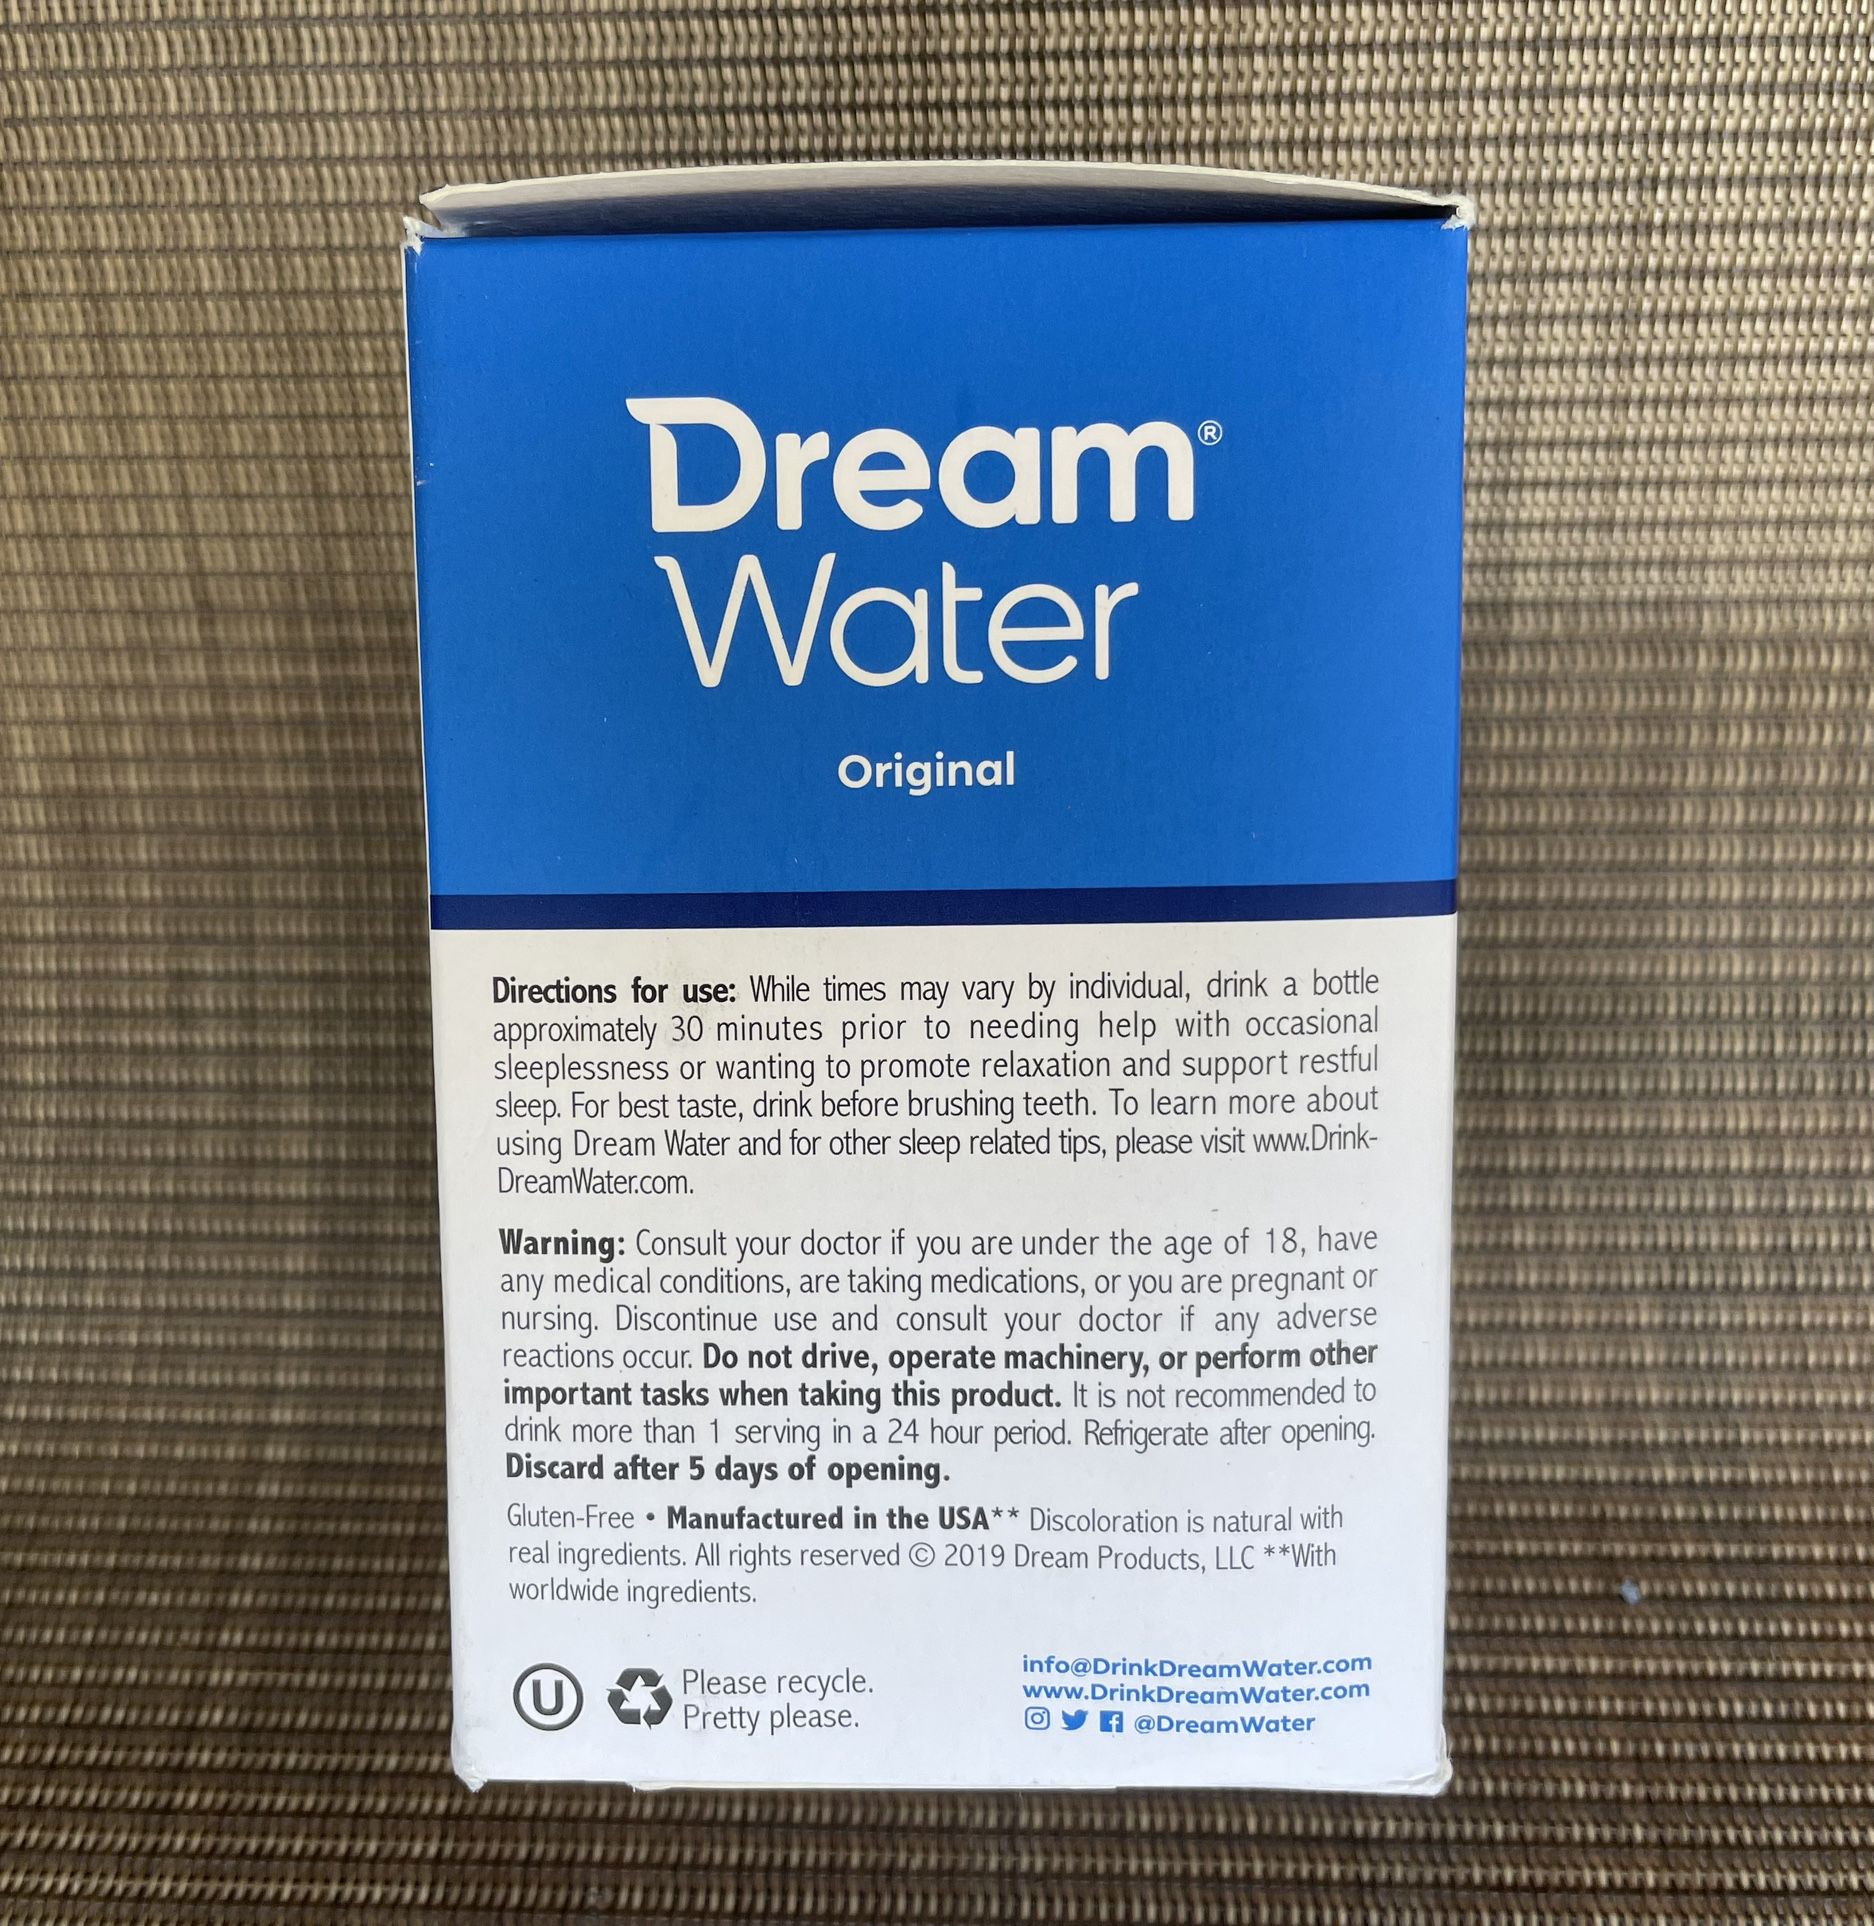 Dream Water Beauty Sleep Stat Natural Blend Unopened 4 x 2.5 oz bot Snoozeberry